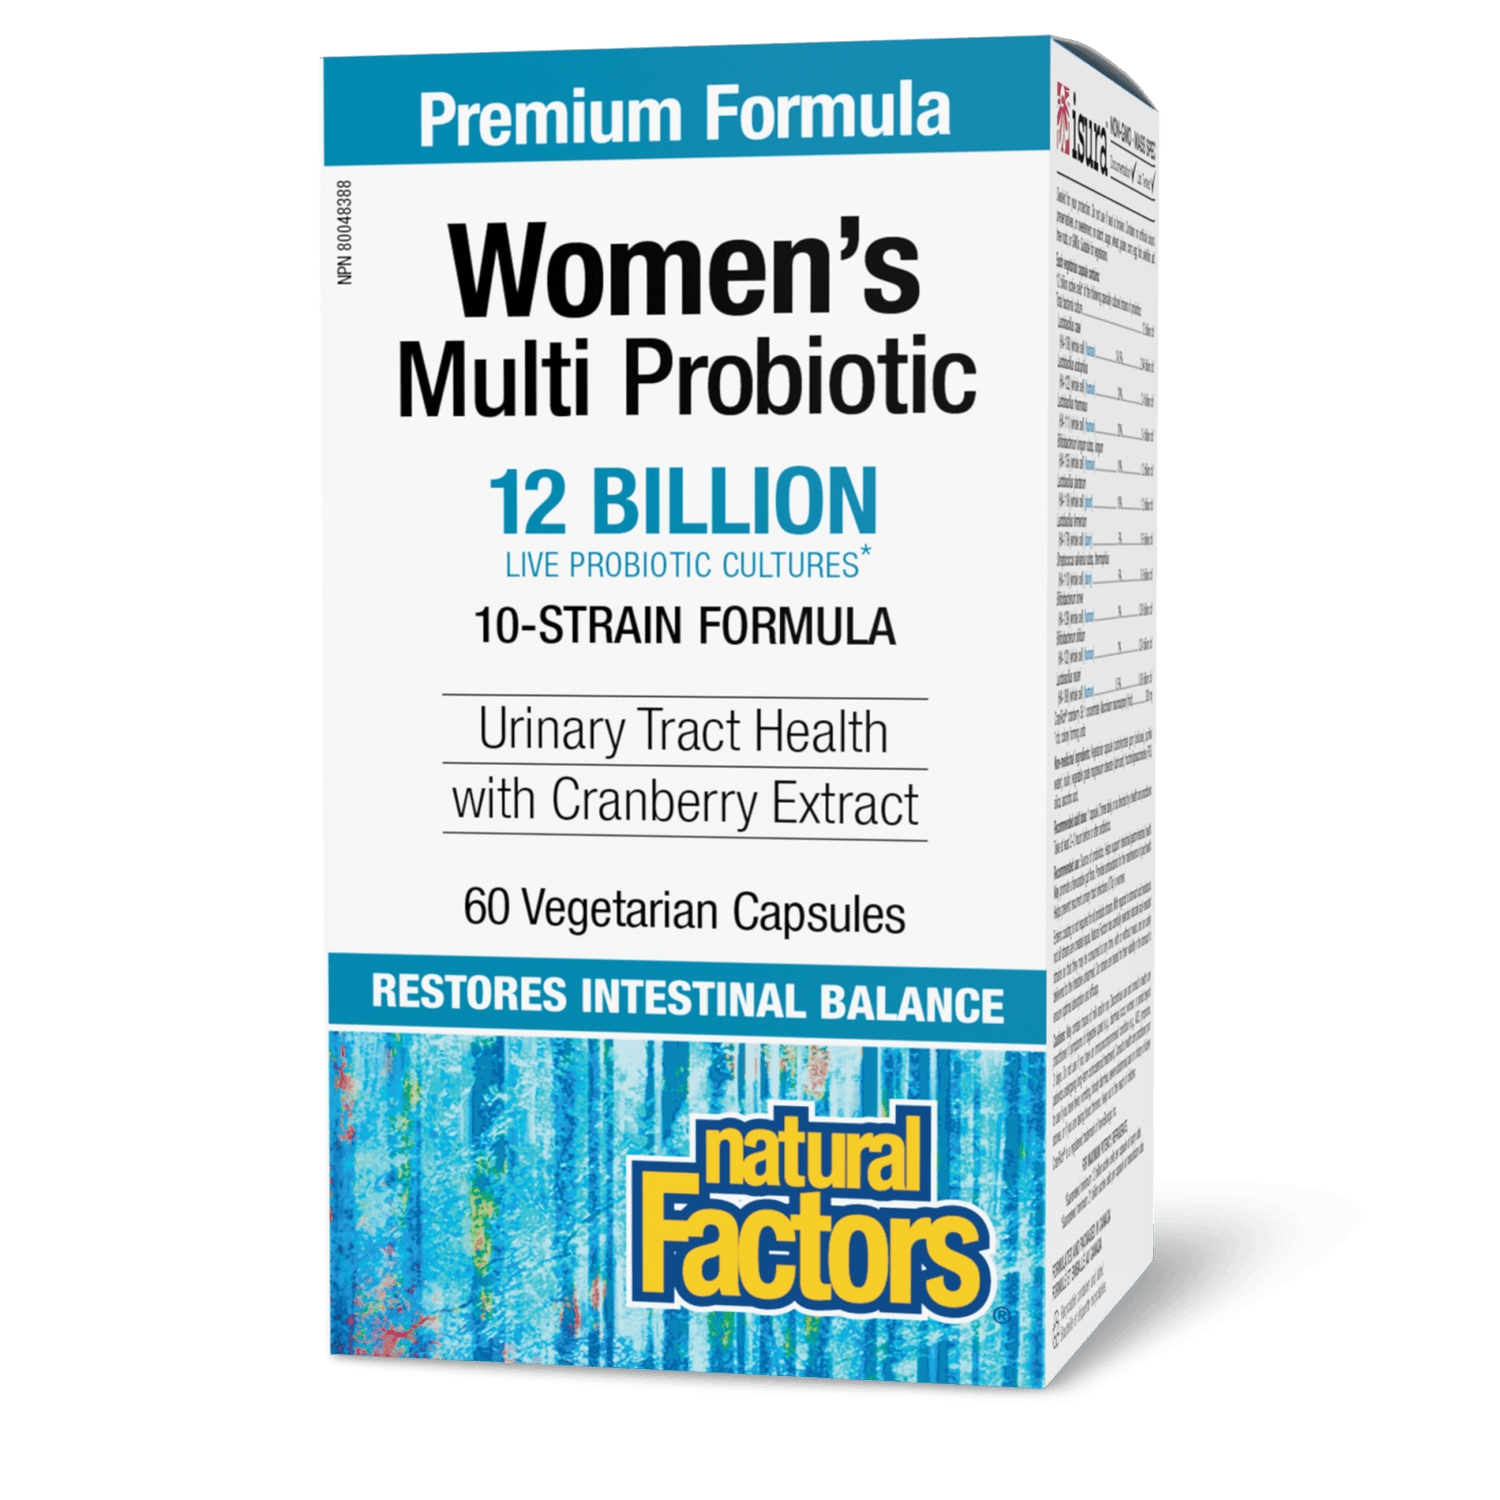 Women’s Multi Probiotic 12 Billion Live Probiotic Cultures, Natural Factors|v|image|1849